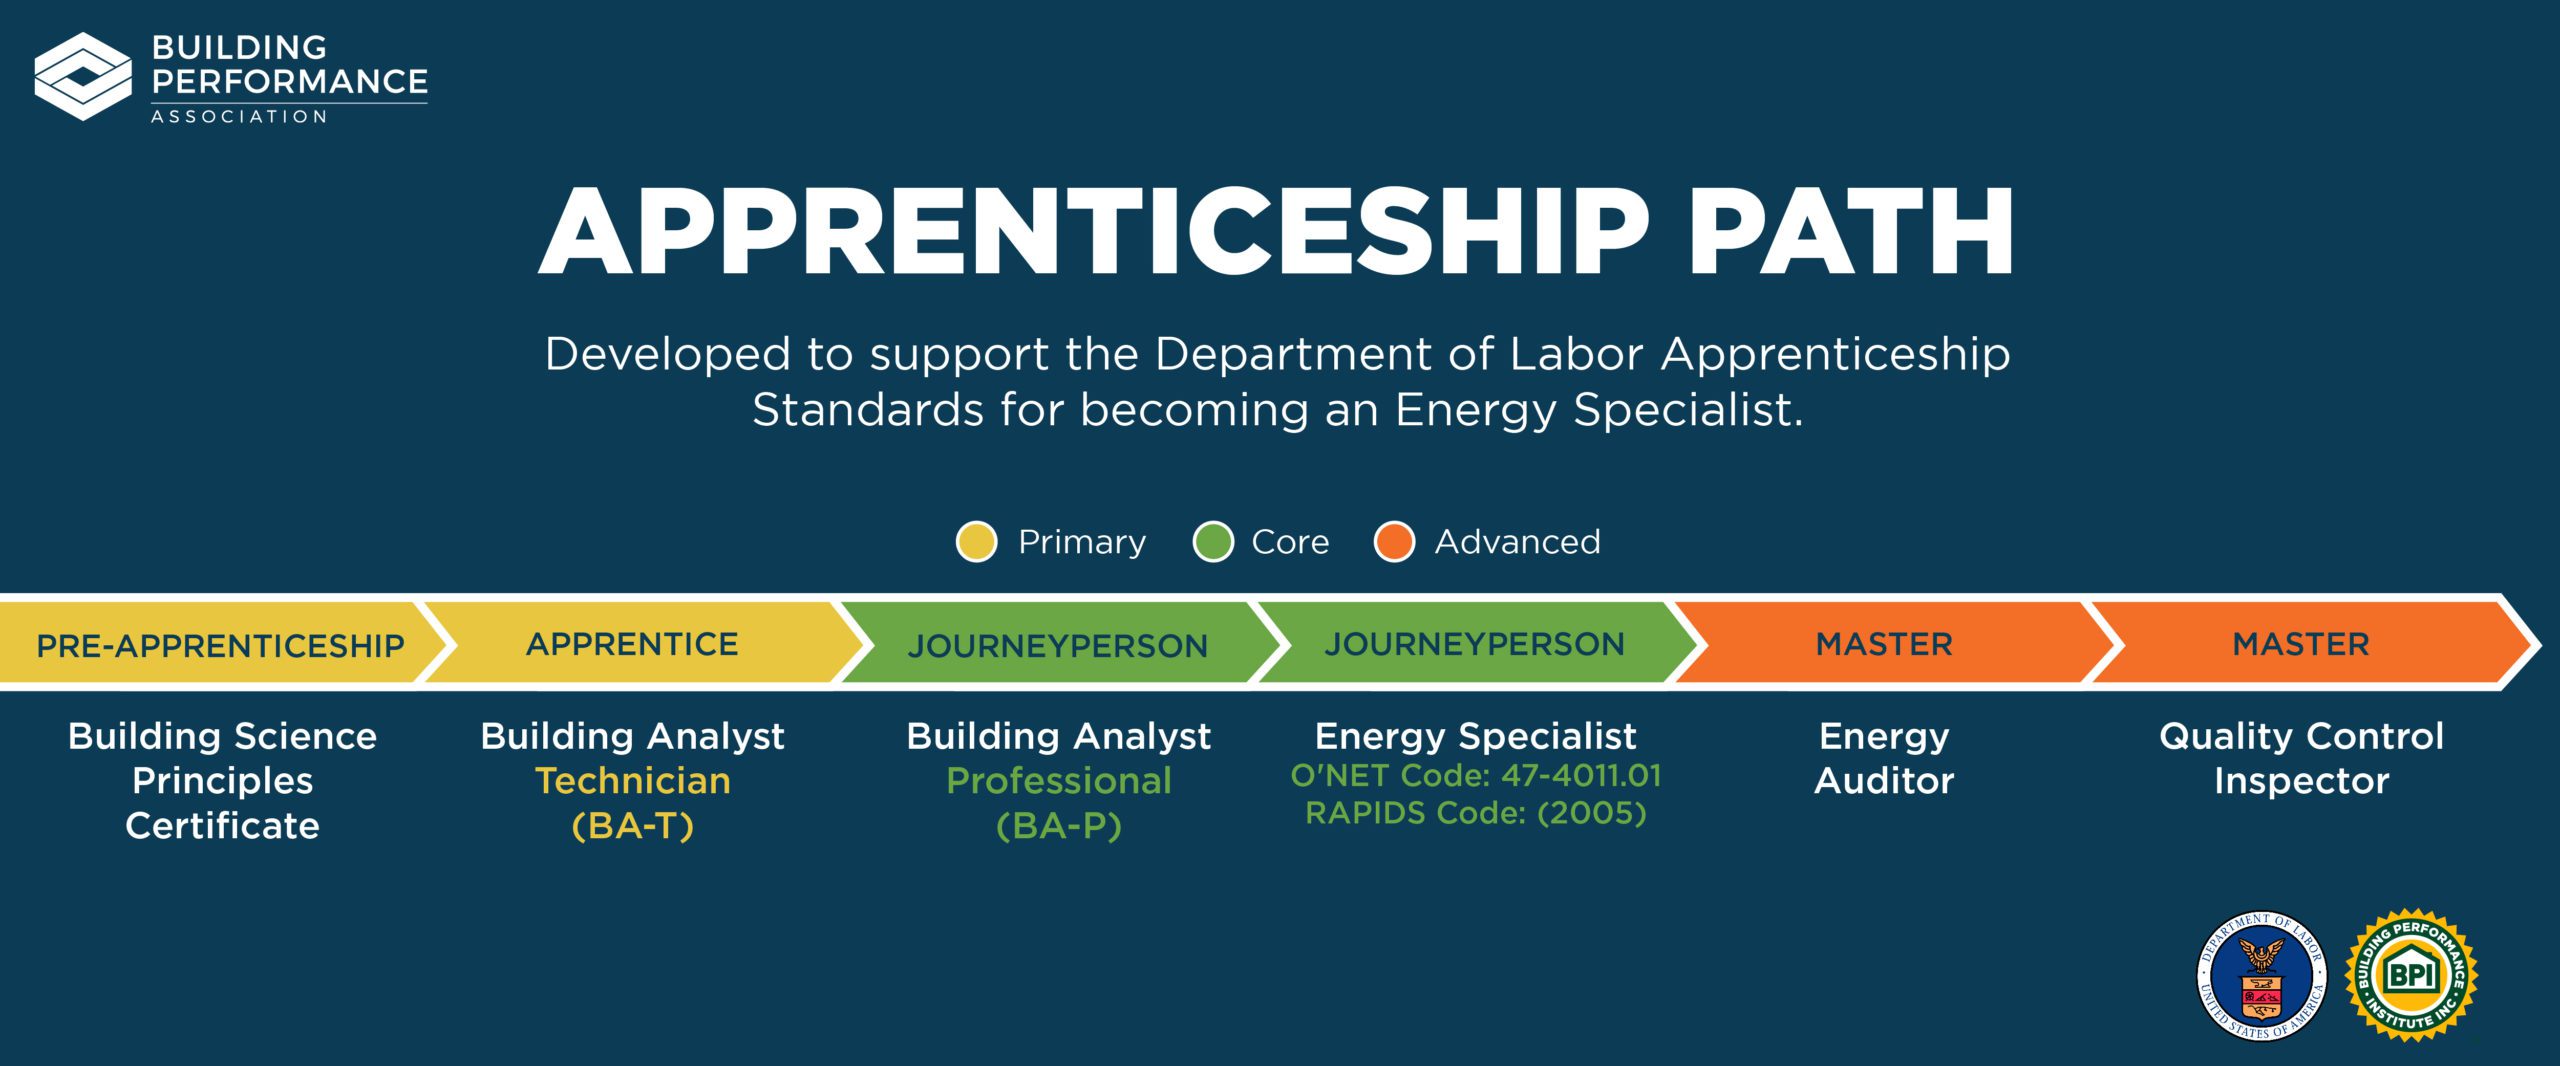 BPA_Apprenticeship-Path-Graphic_V2